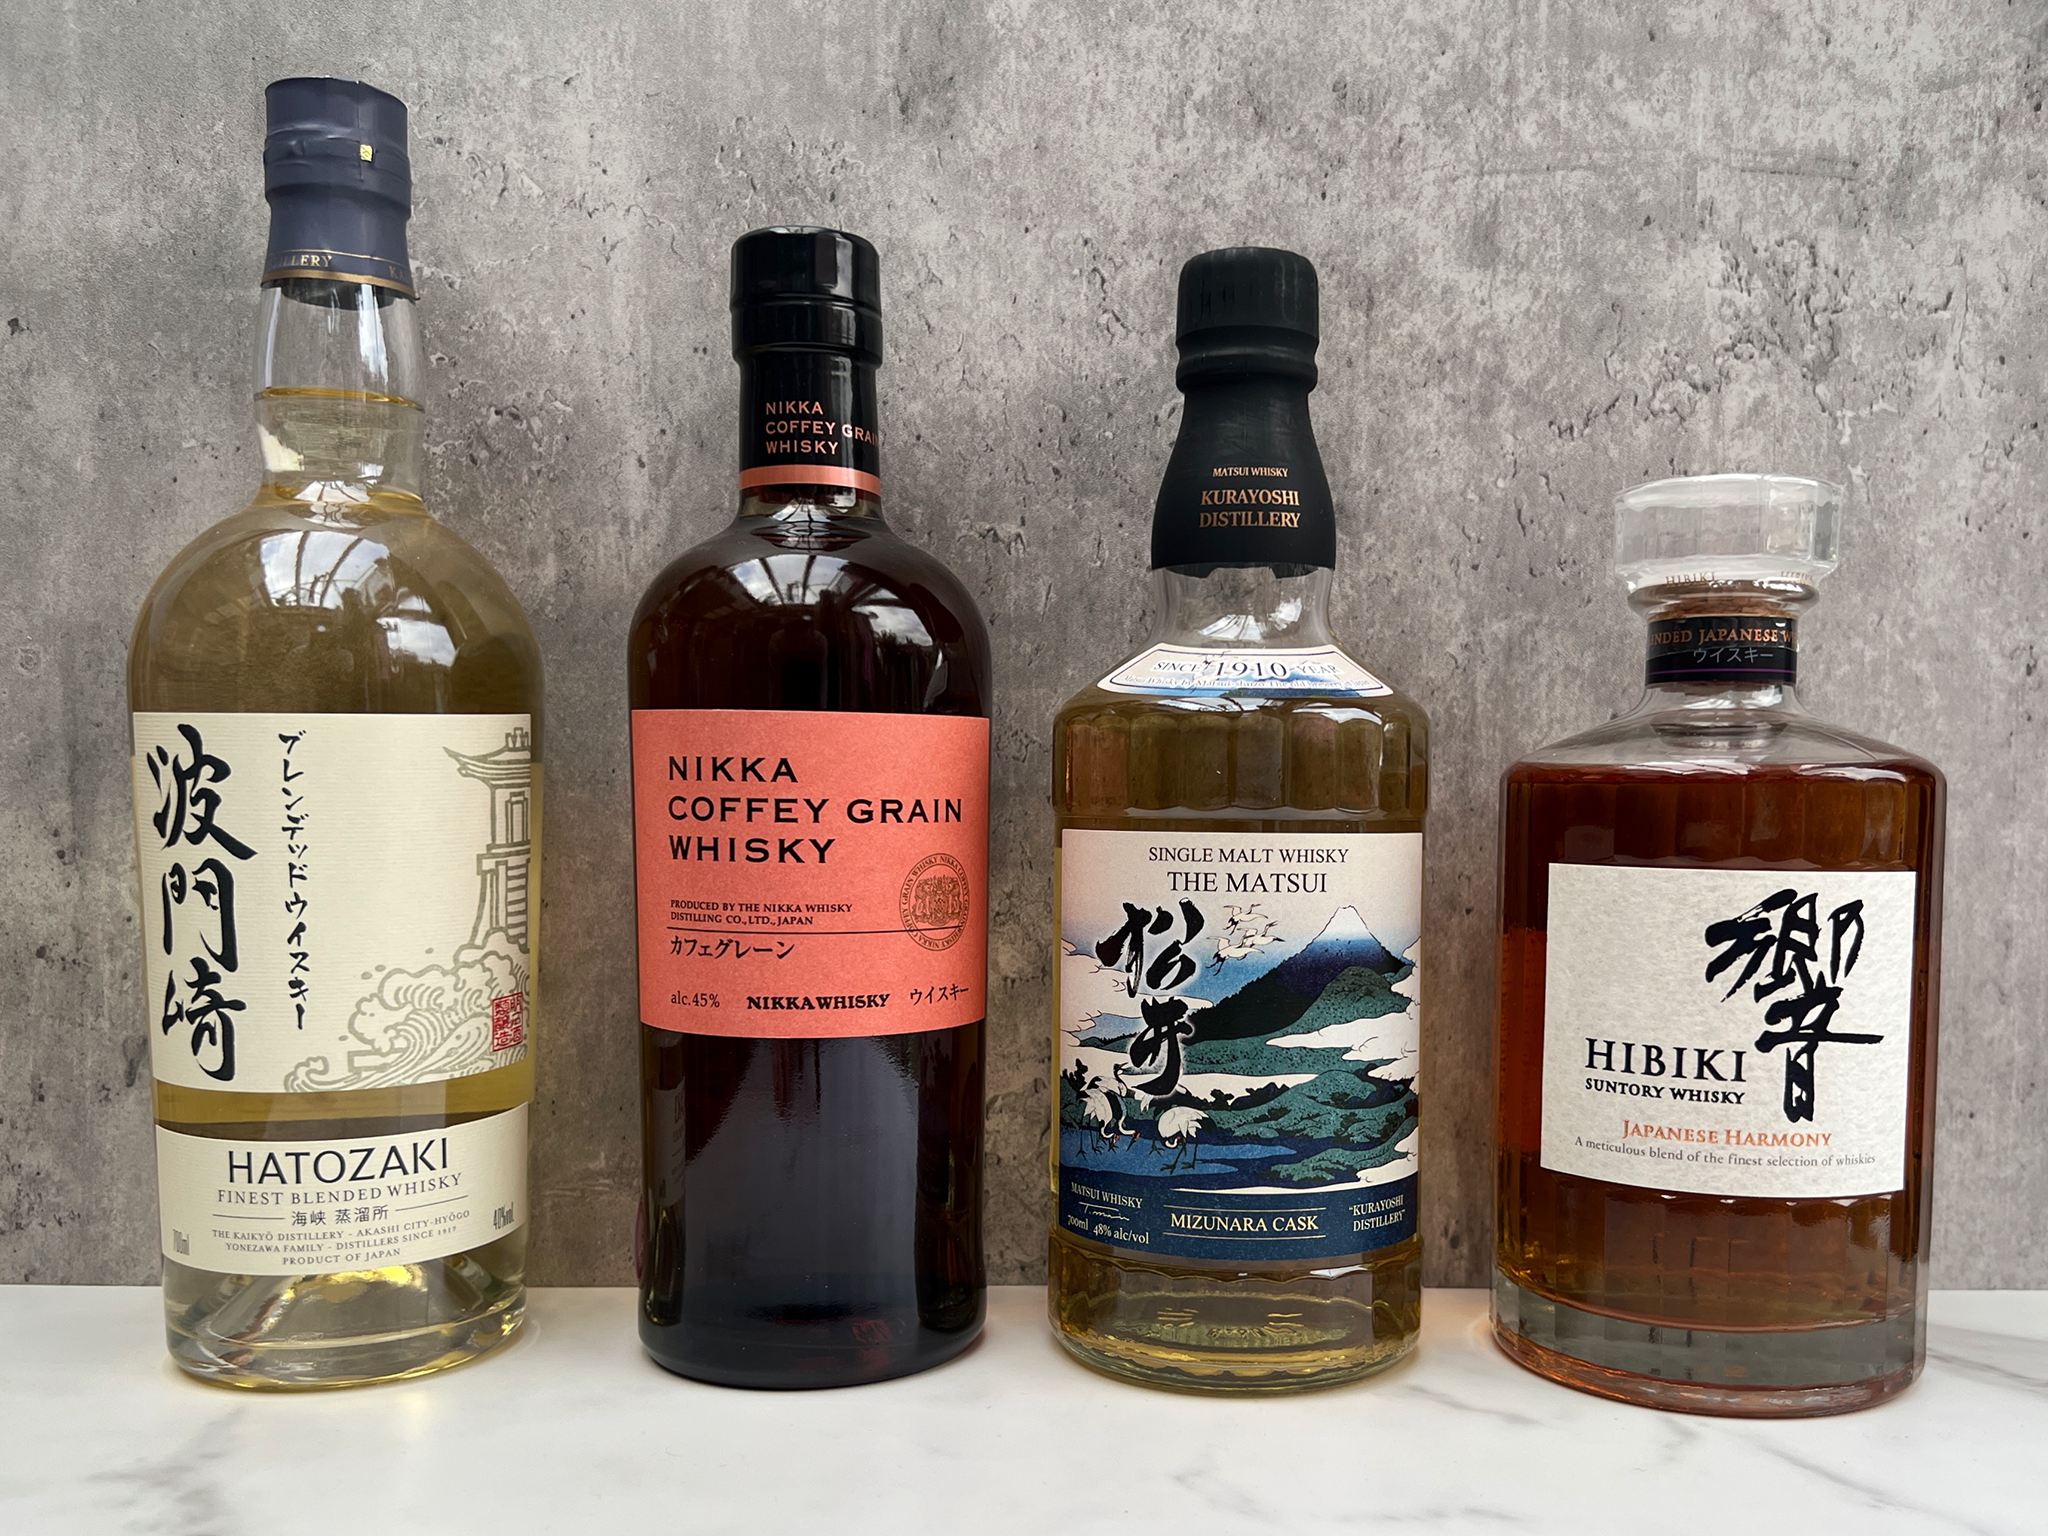 Hibiki Japanese Harmony Whisky Review & Tasting Notes